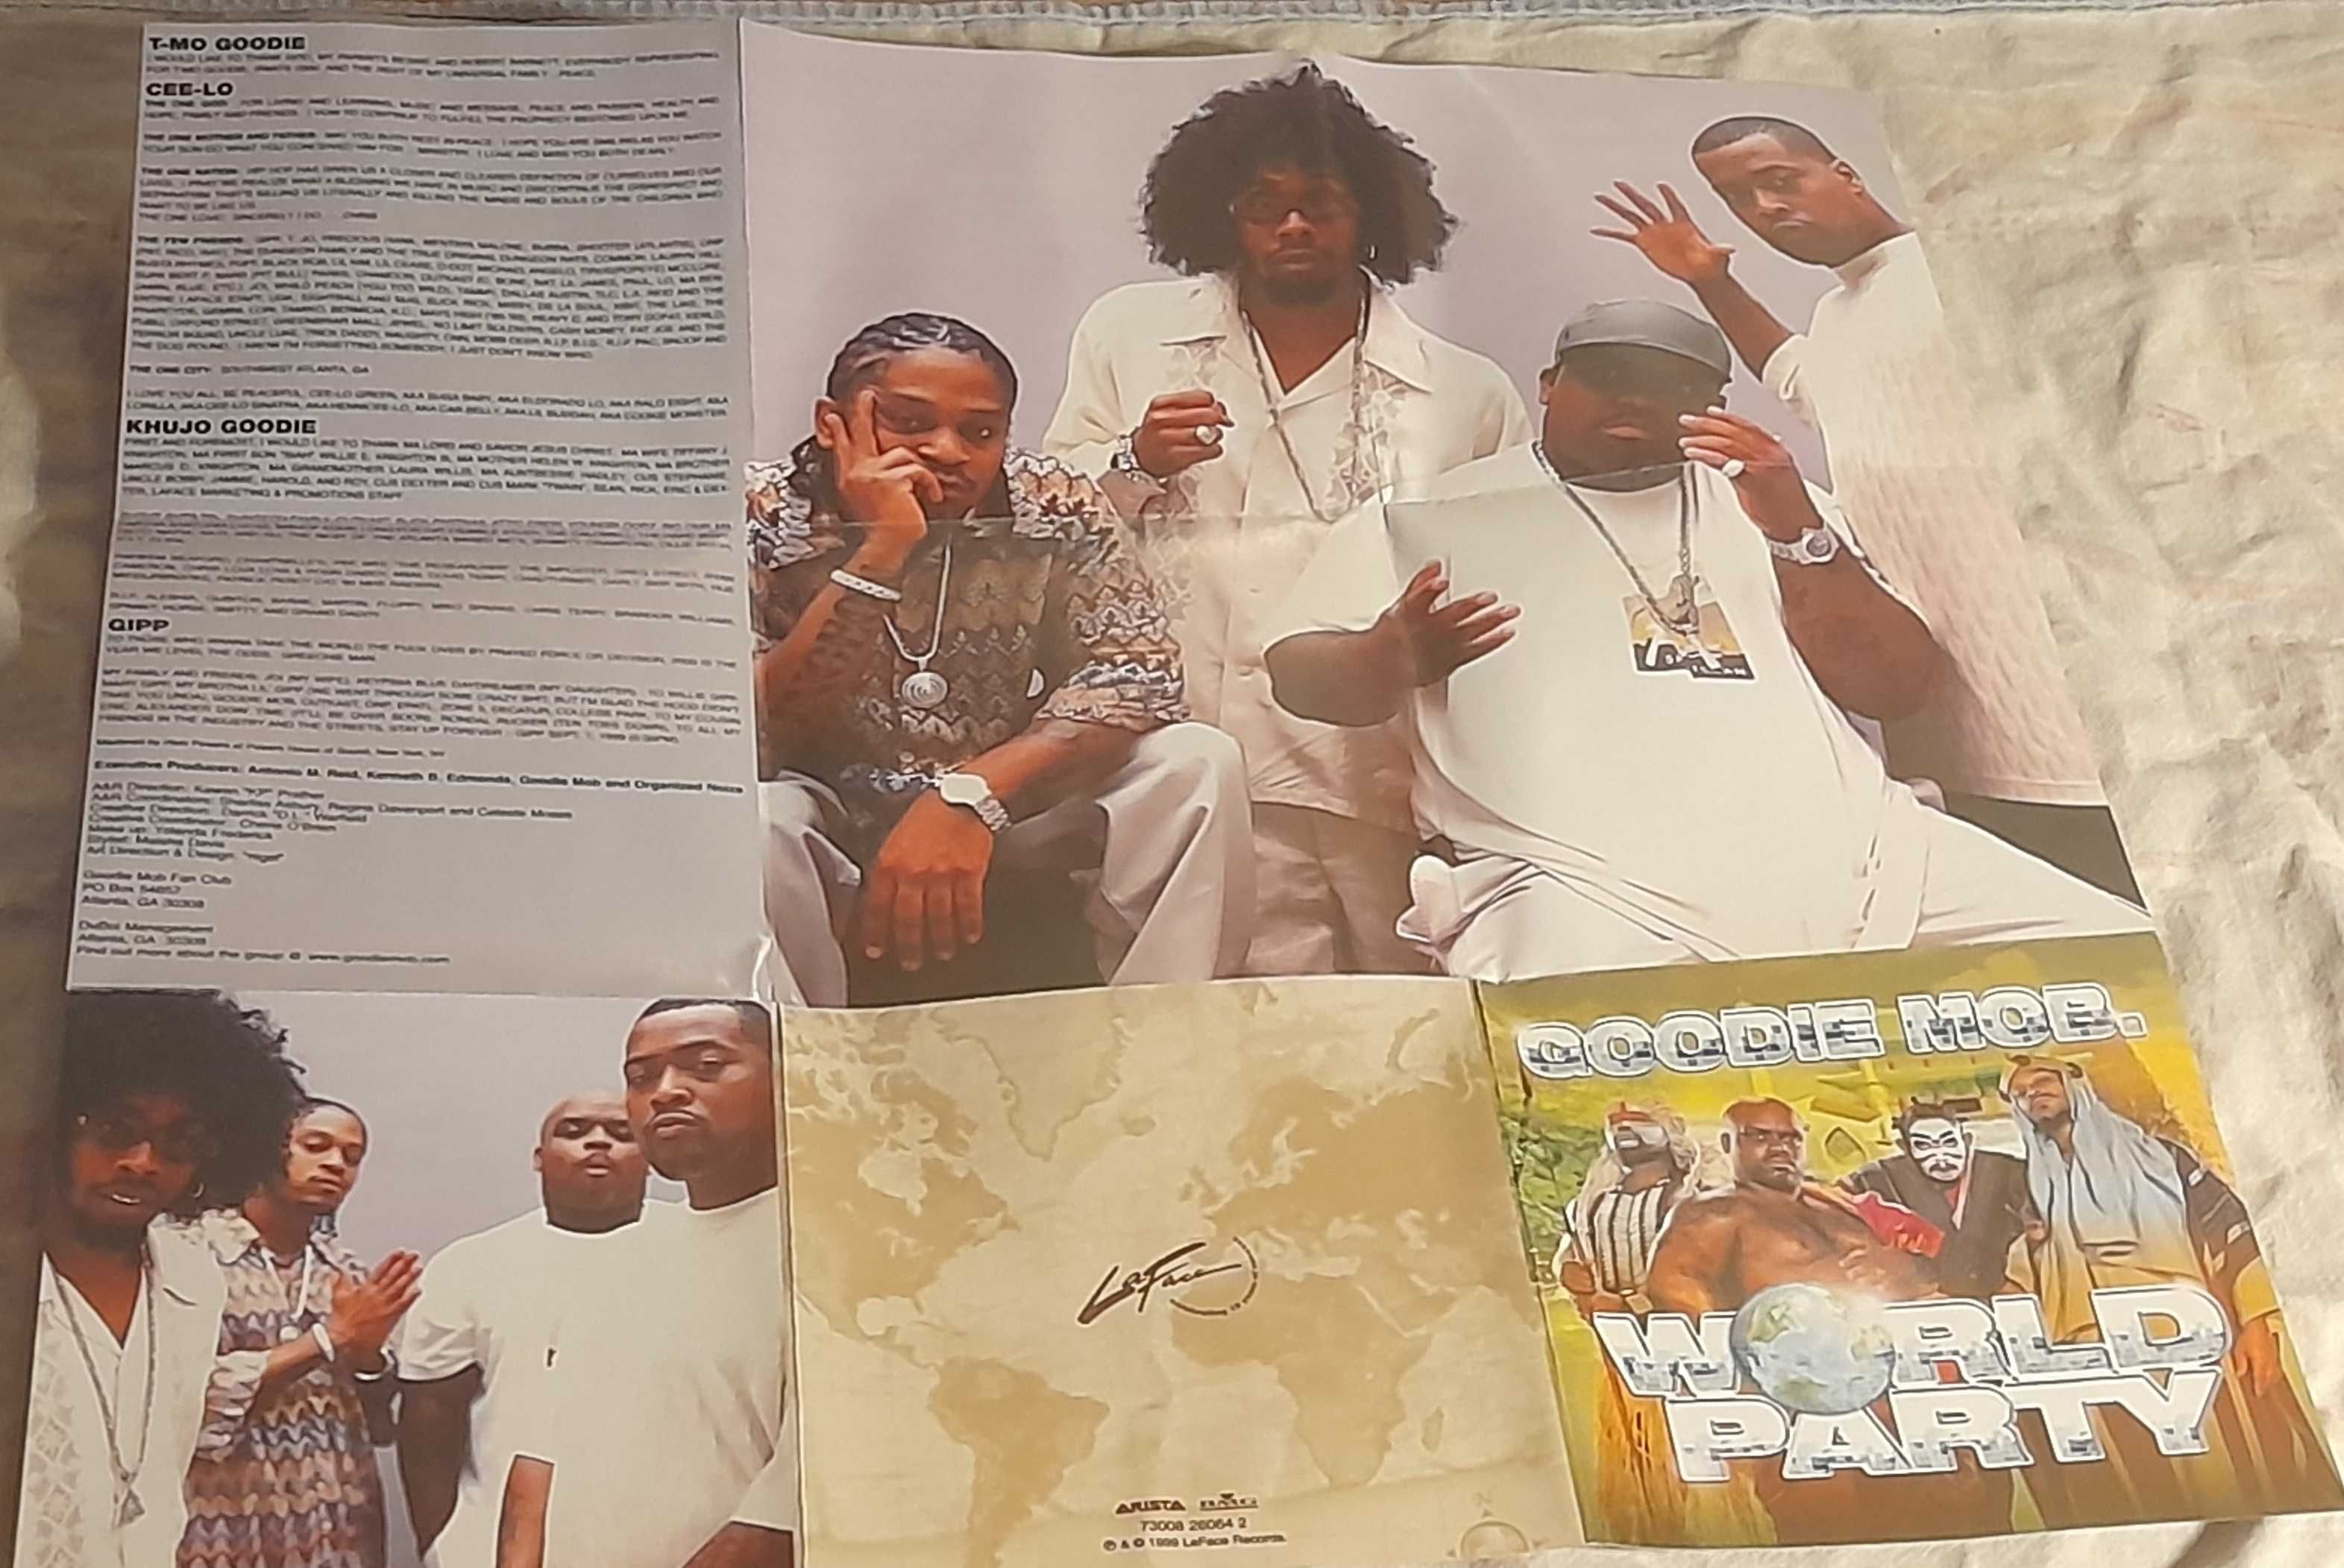 Goodie Mob "World Party" (1999) rap Atlanta